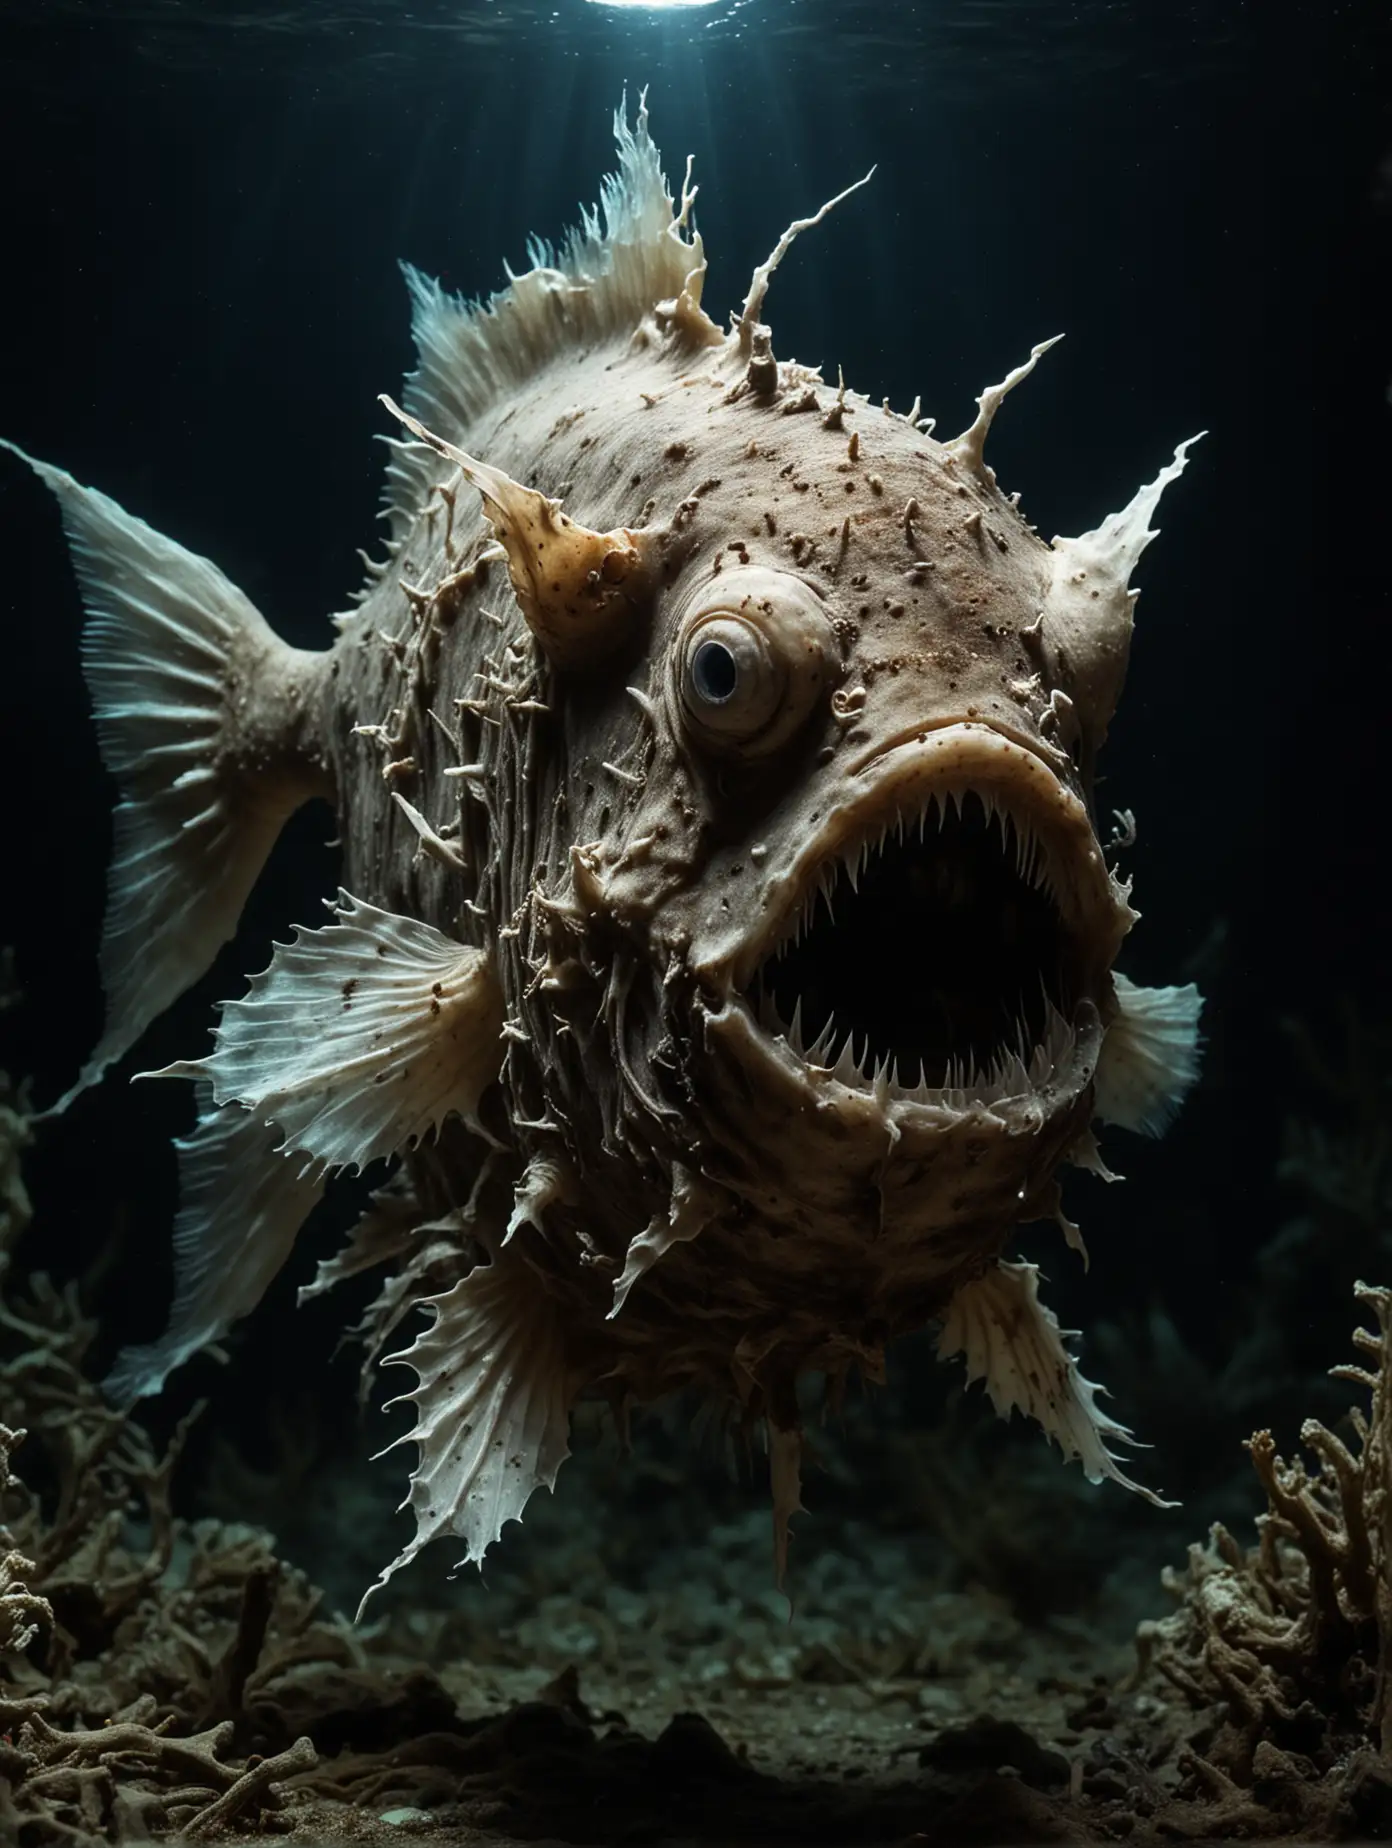 Eerie Anglerfish in Dim Light Creepy Underwater Scene